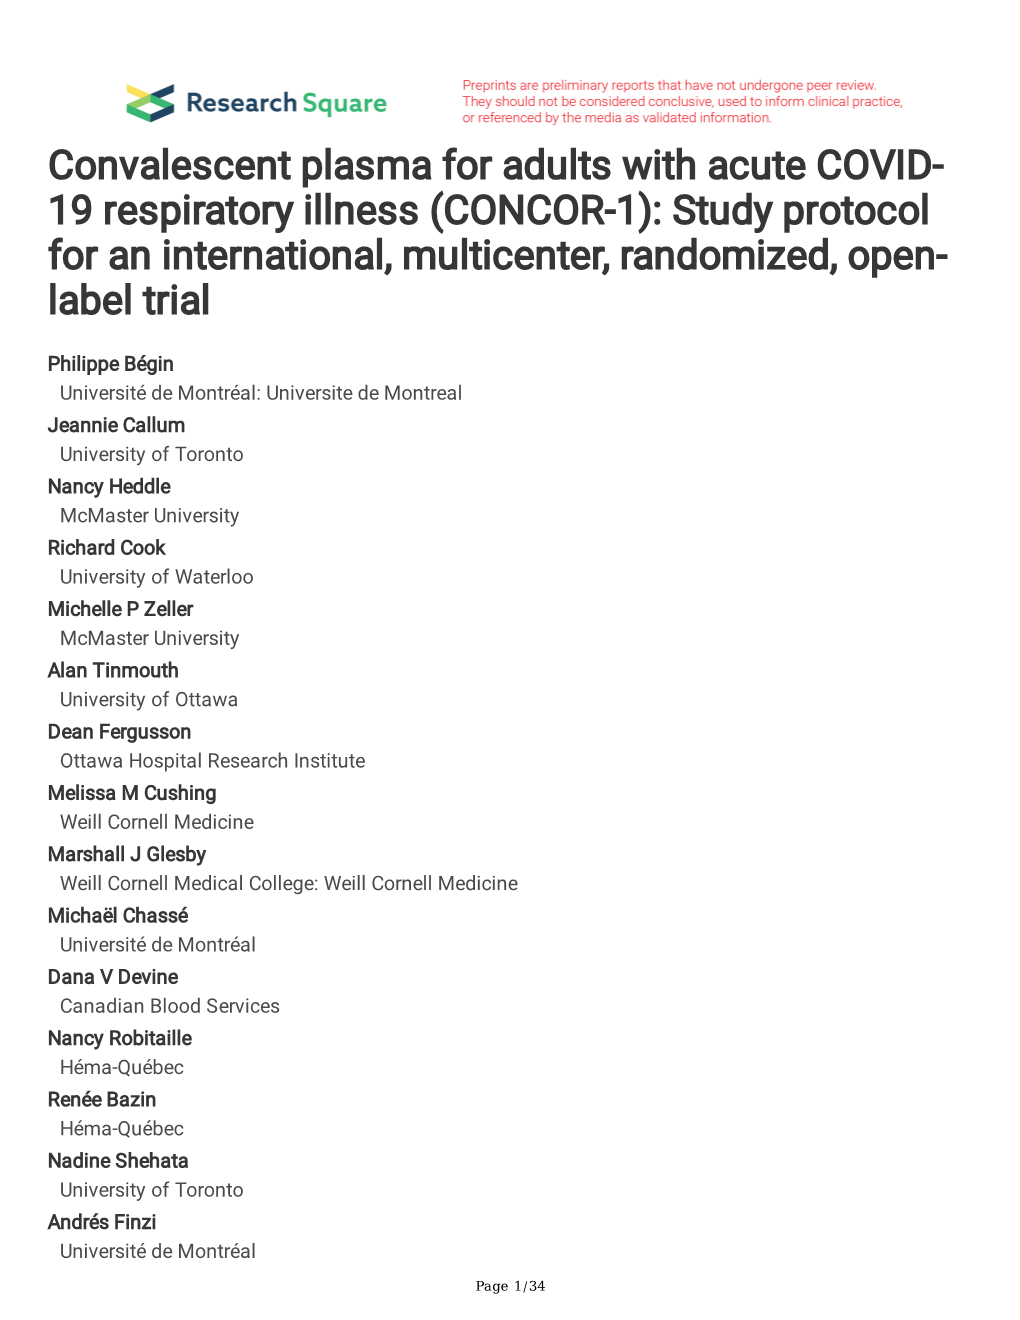 19 Respiratory Illness (CONCOR-1): Study Protocol for an International, Multicenter, Randomized, Open- Label Trial